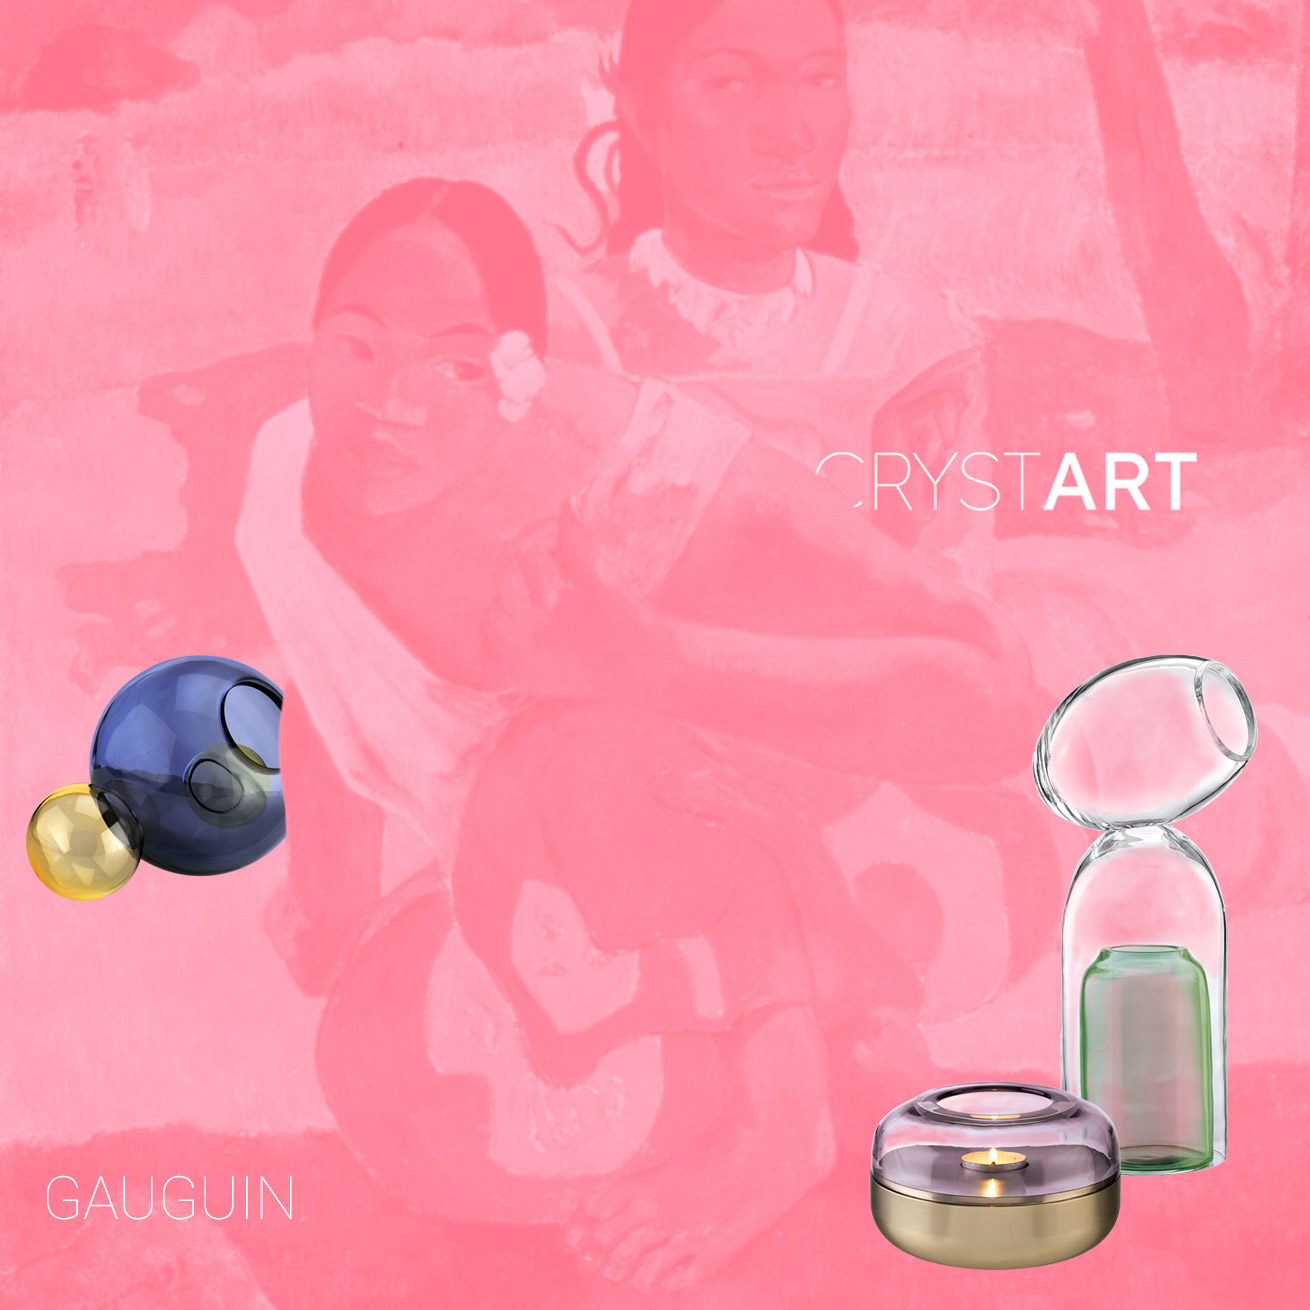 crystart crystal design gauguin